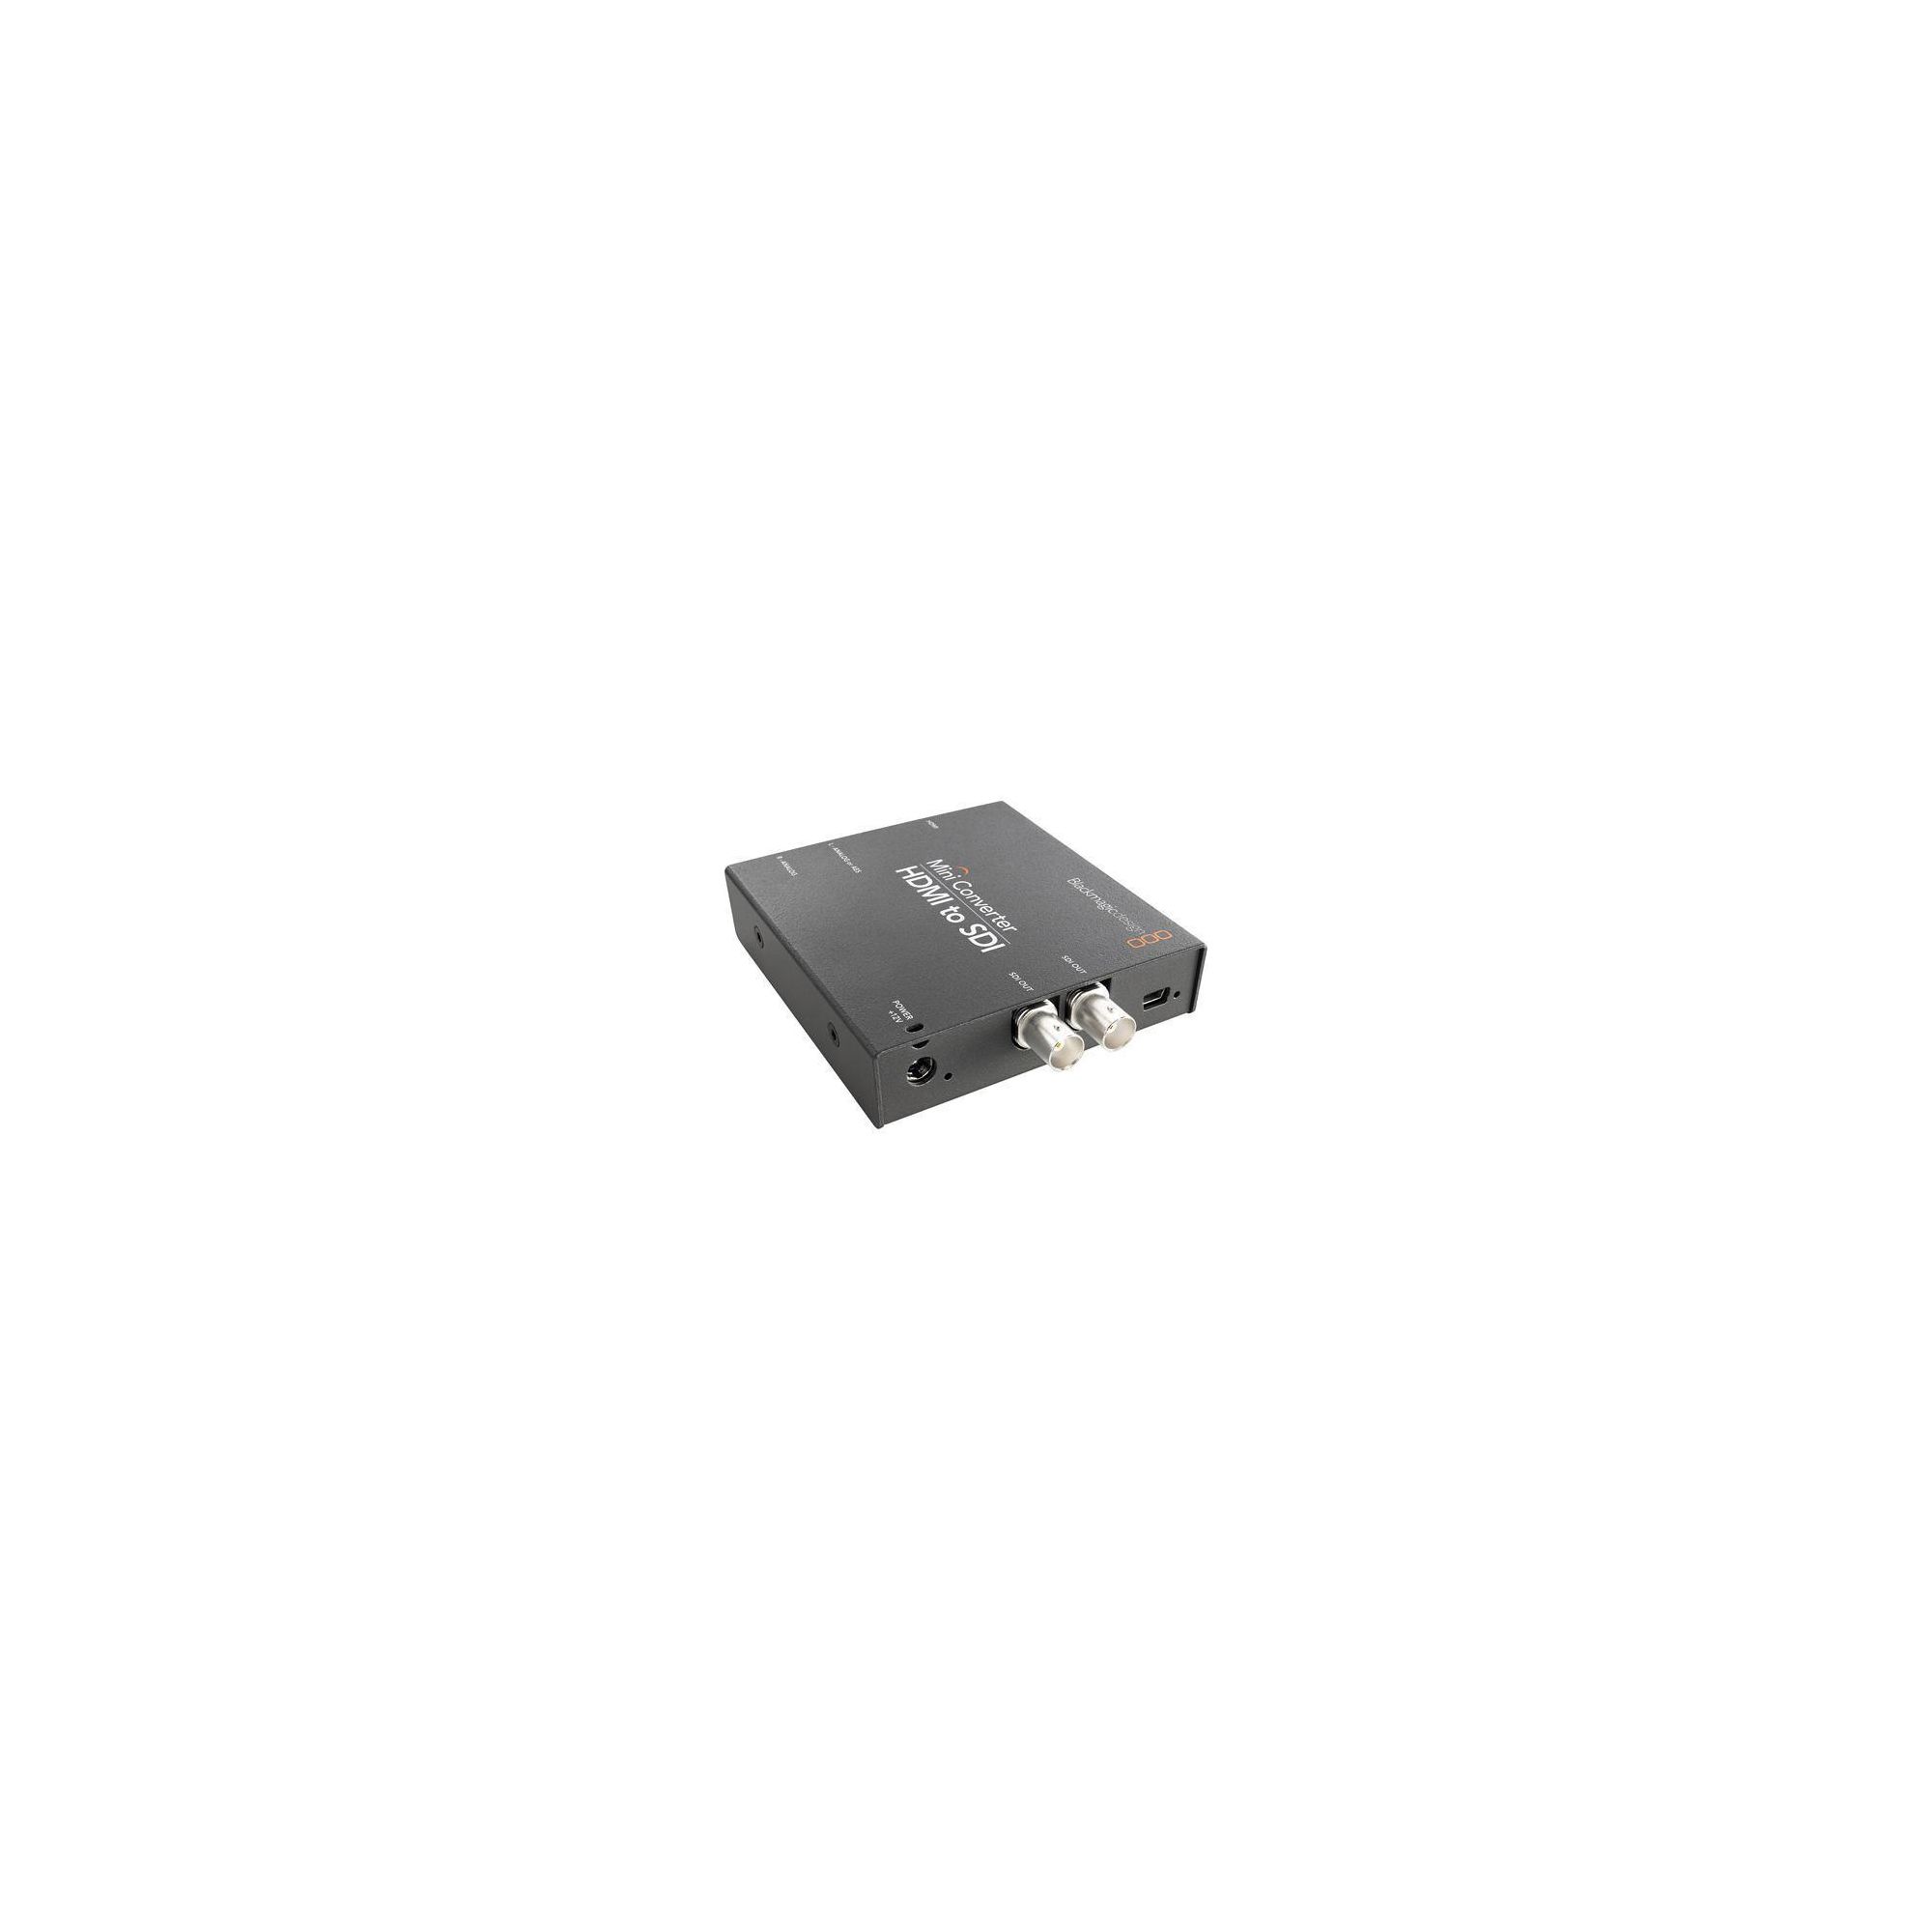 MINI CONVERTOR HDMI TO SDI at Tesco Direct